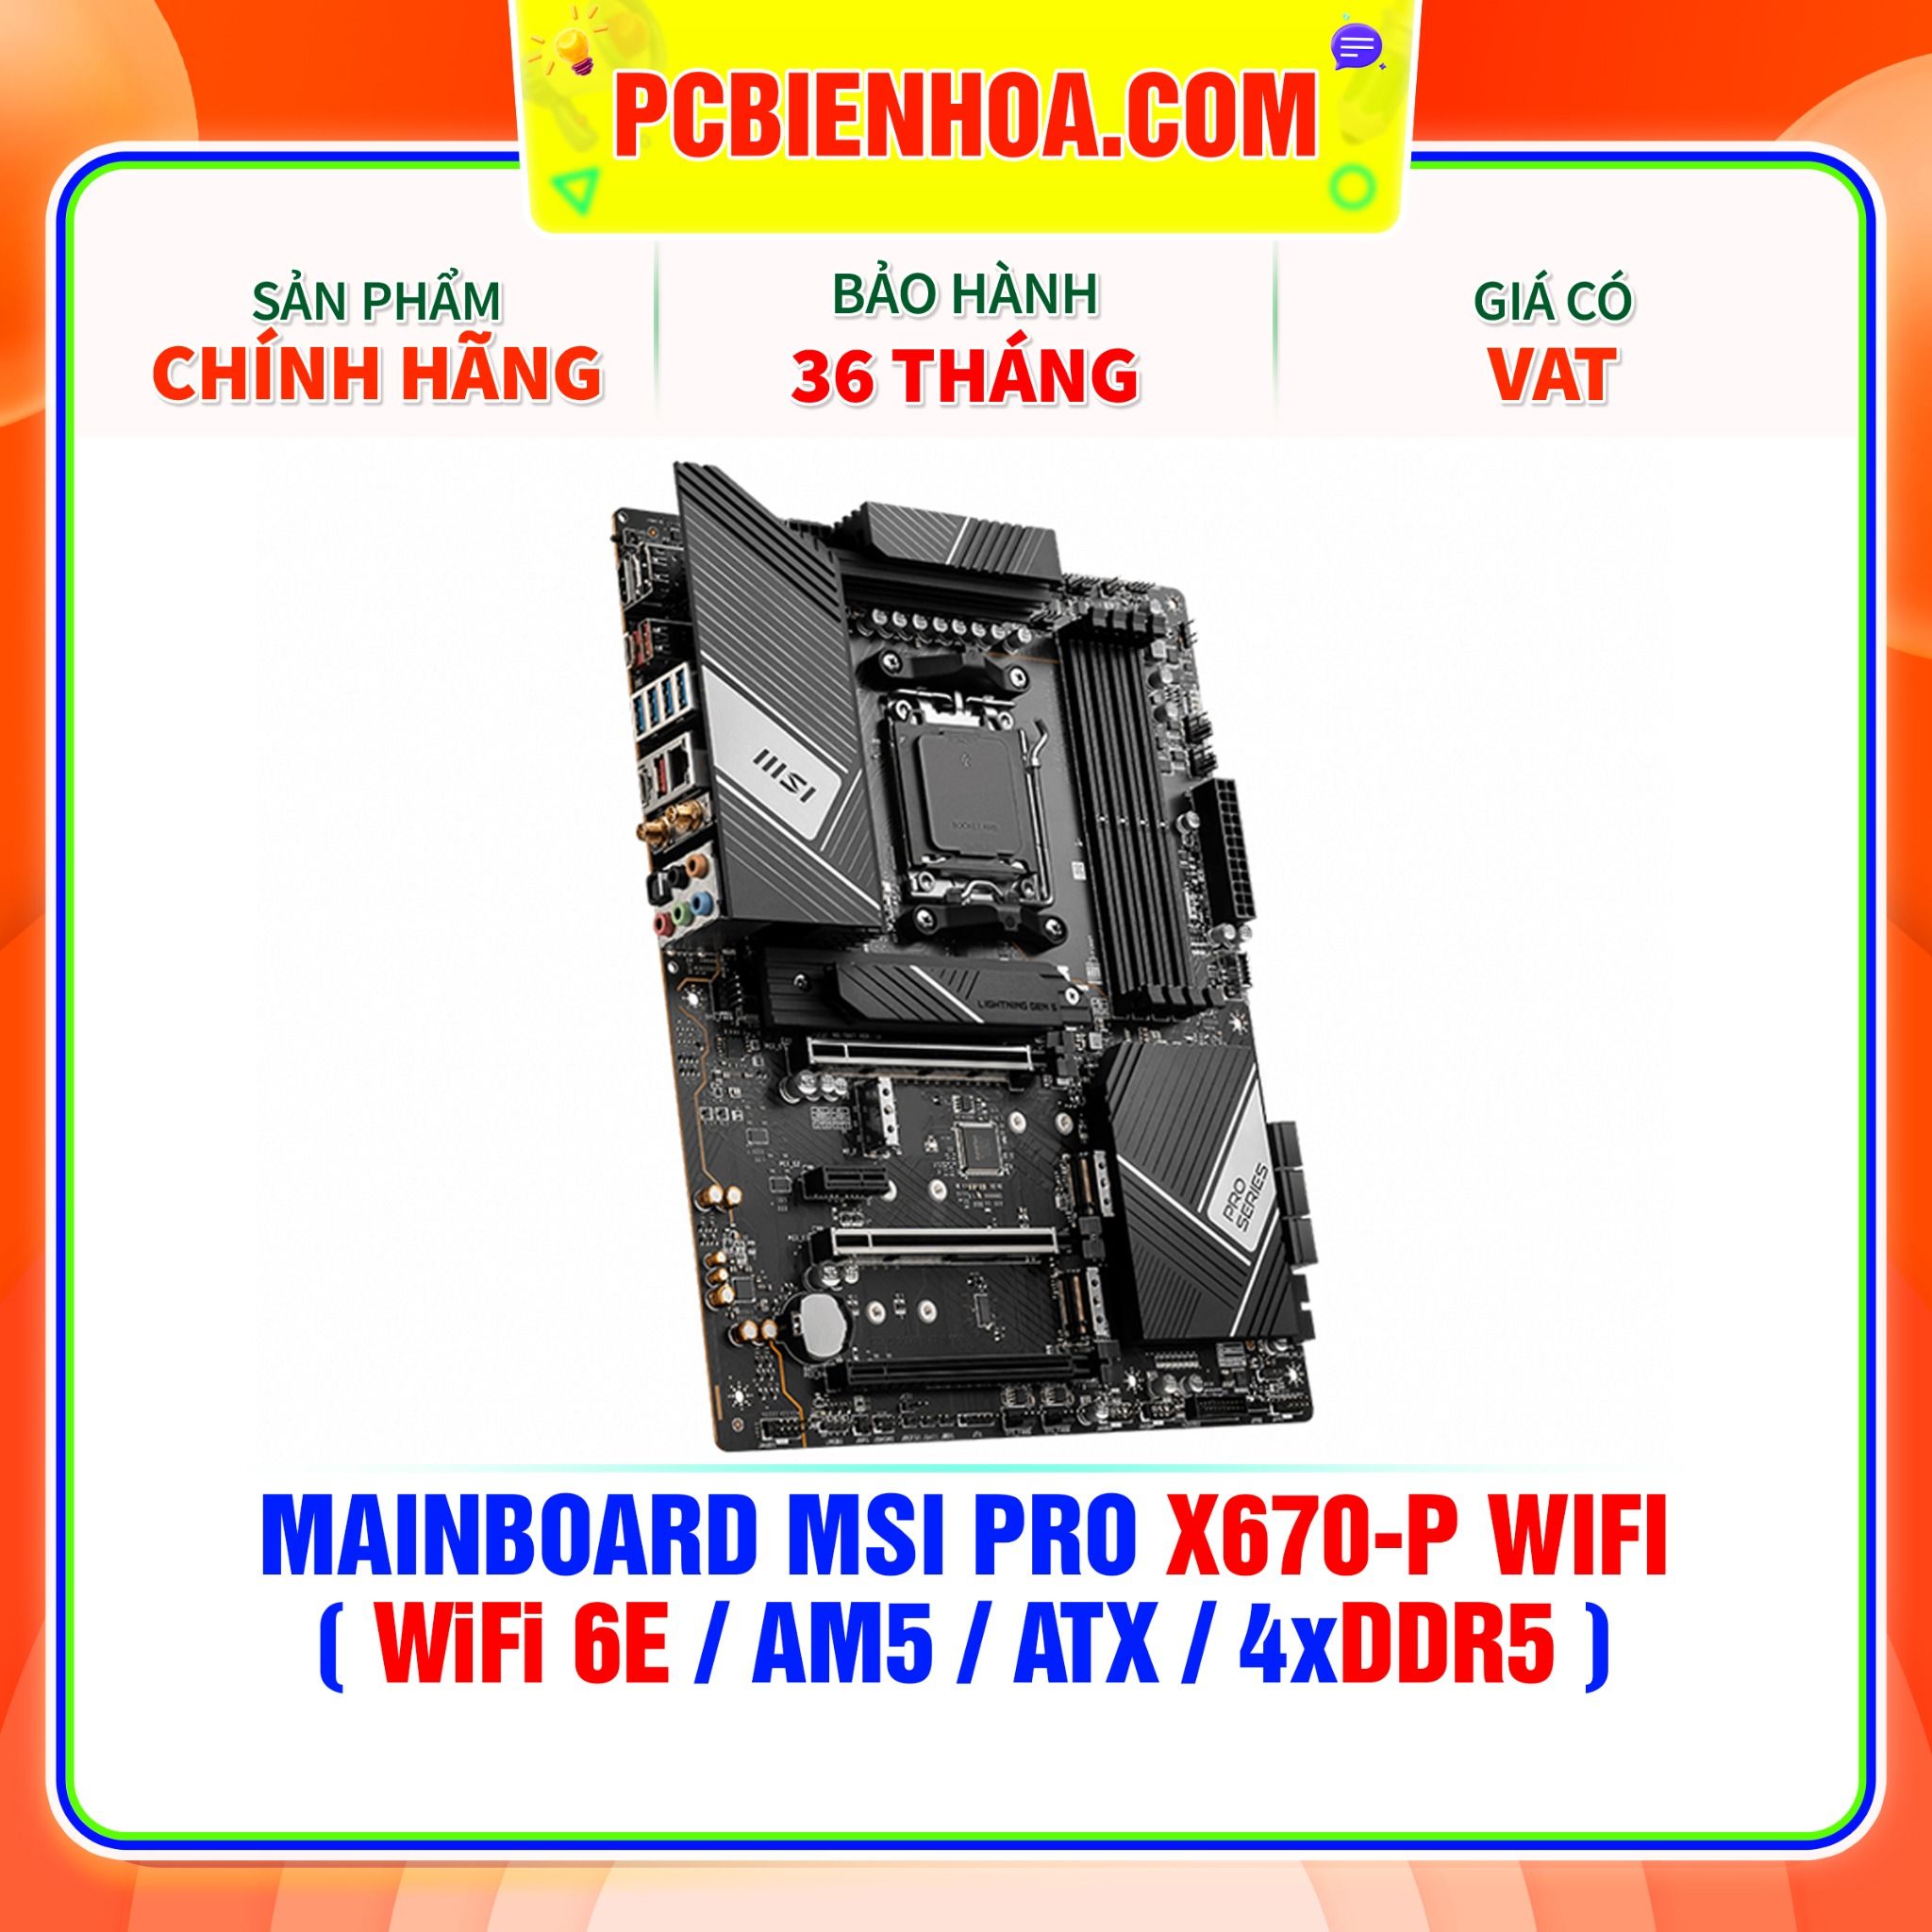  DDR5 - MAINBOARD MSI PRO X670-P WIFI ( WiFi 6E / AM5 / ATX / 4xDDR5 ) 